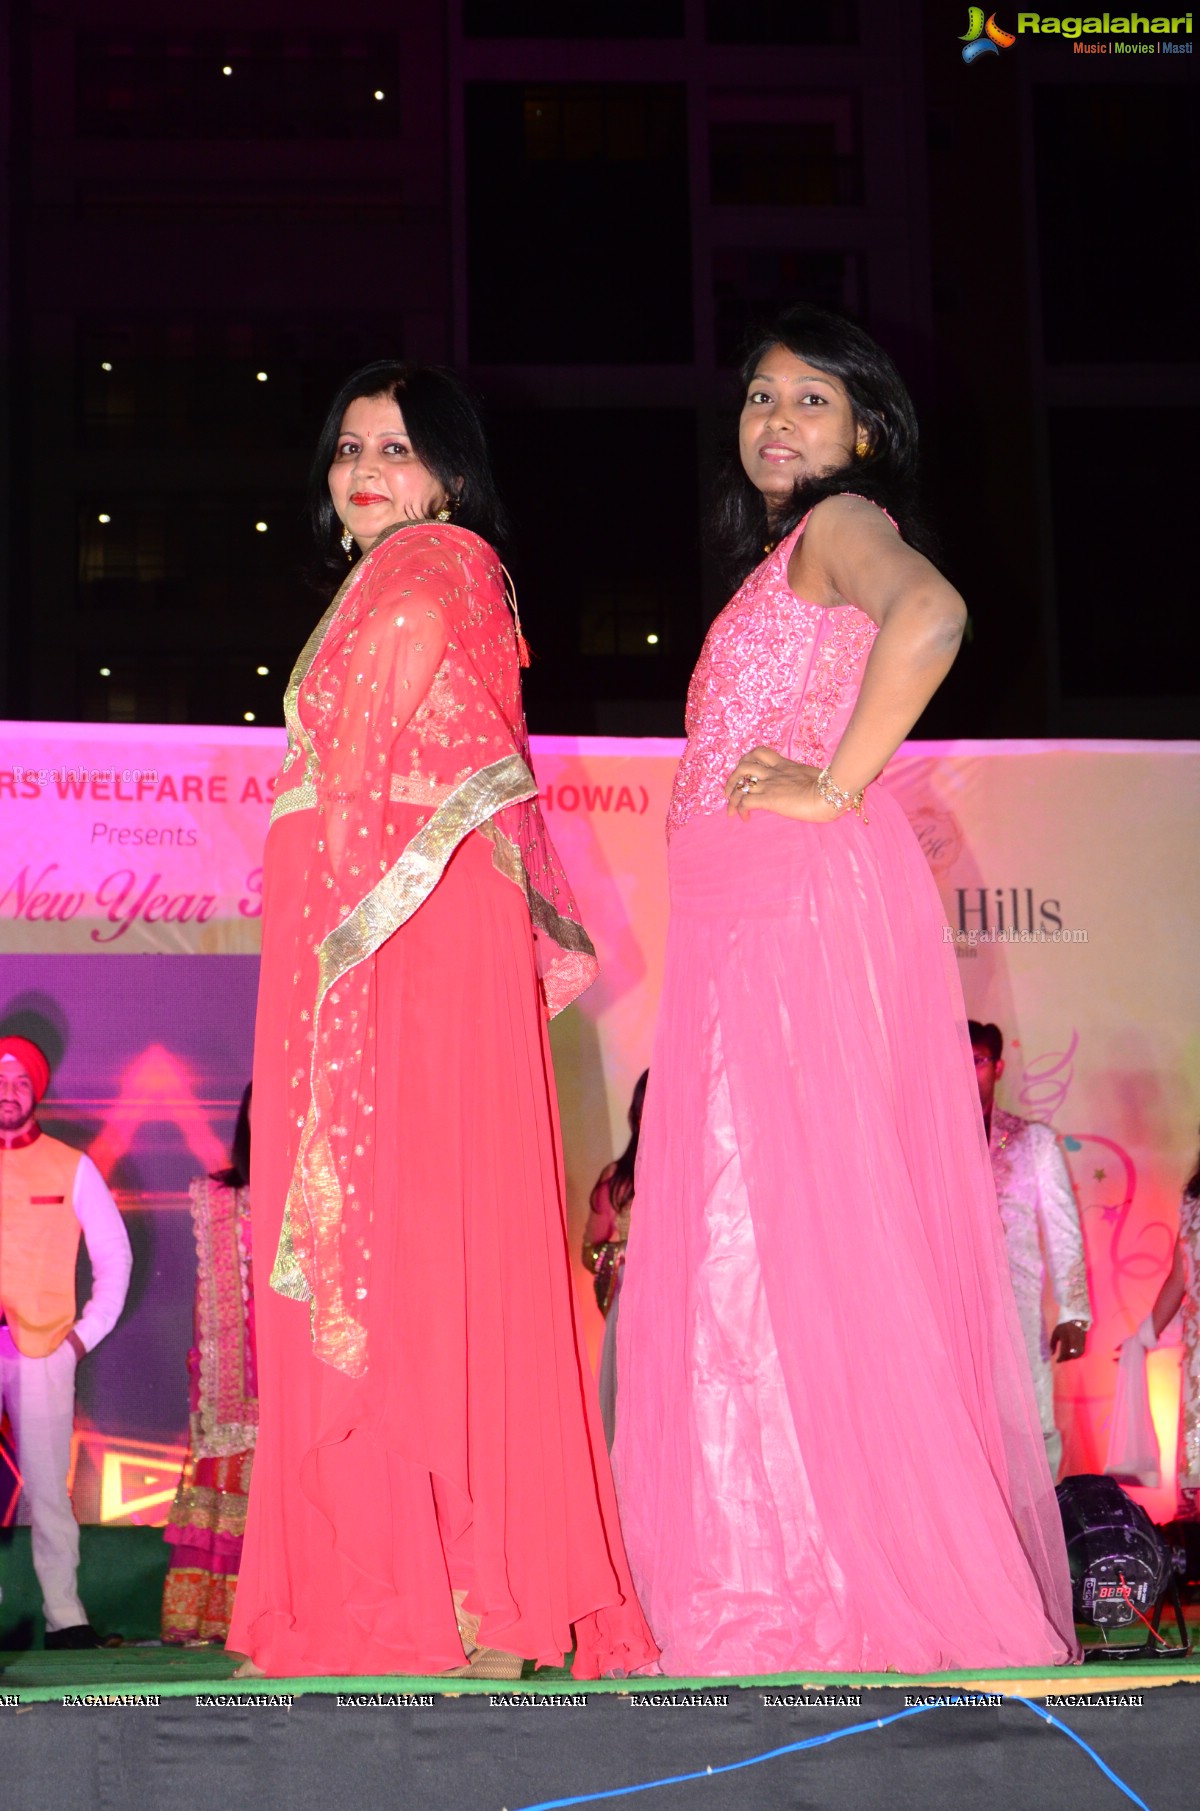 Lanco Hills - Fashion Show at the Festive Carnival, Hyderabad